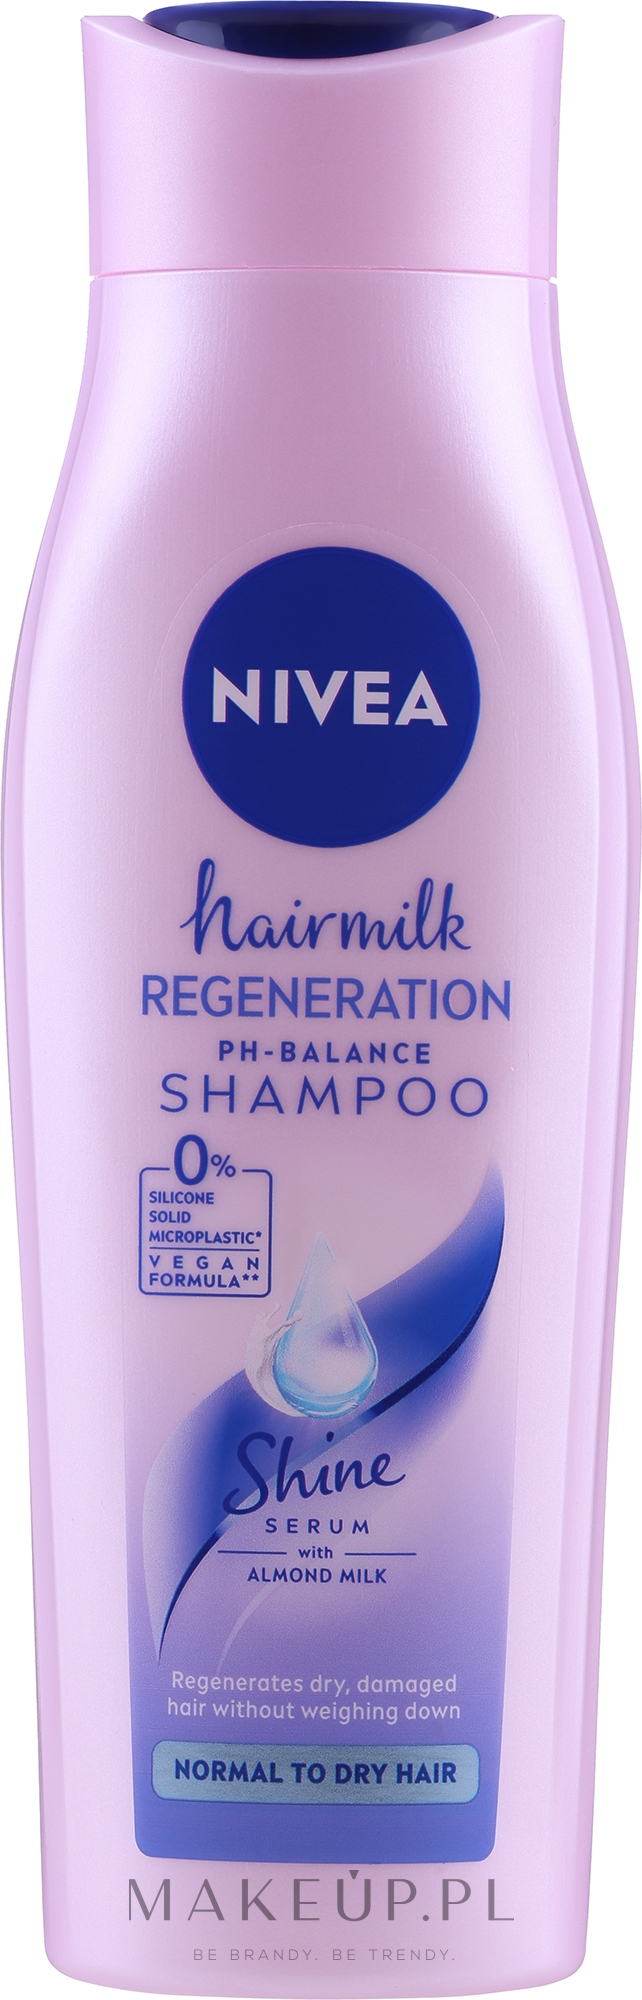 szampon nivea blog